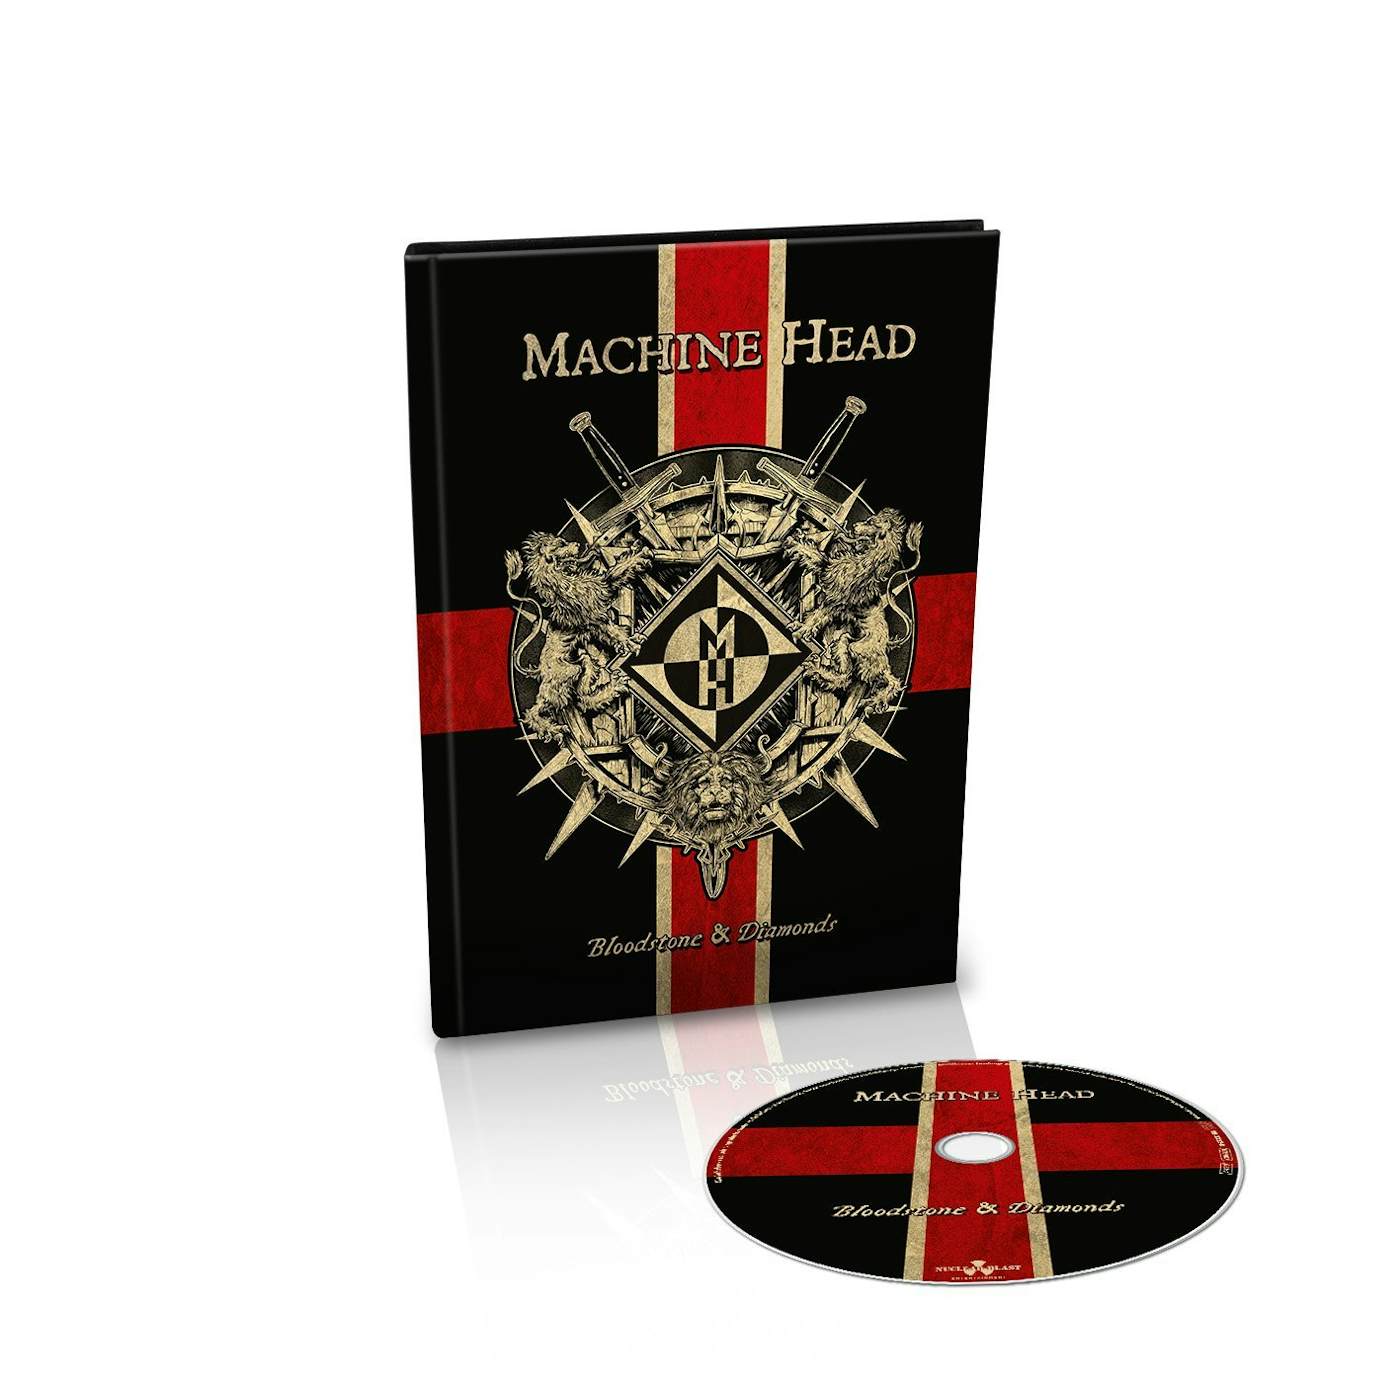 Machine Head BLOODSTONE & DIAMONDS DELUXE BOOK CD